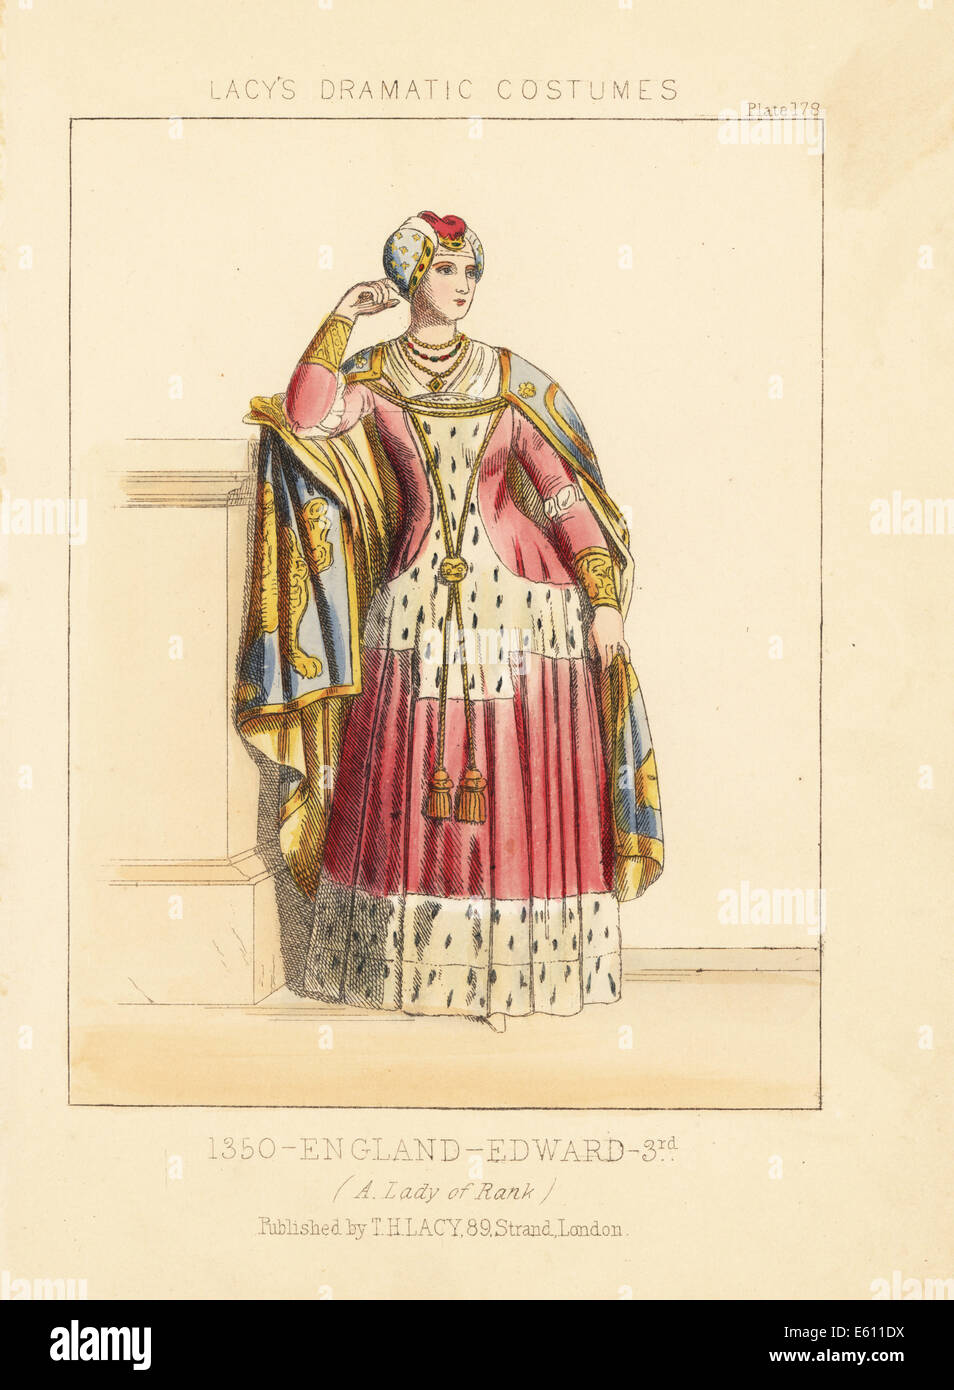 Signora di rango, England, regno di Edoardo III, 1350. Foto Stock